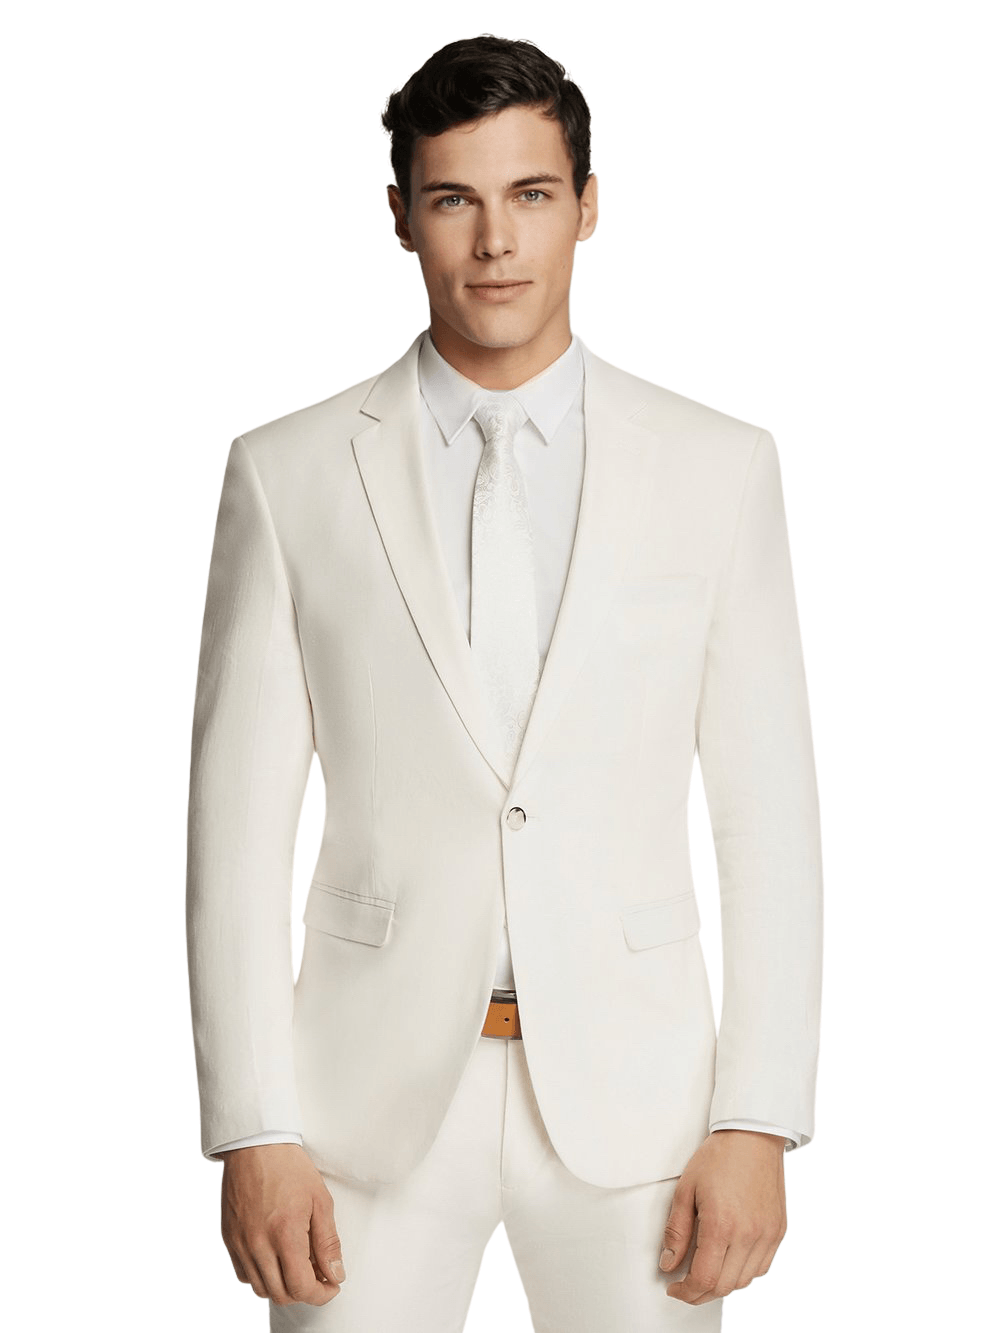 Men's Business Formal Ivory Linen Sport Jacket Stylish Blazer